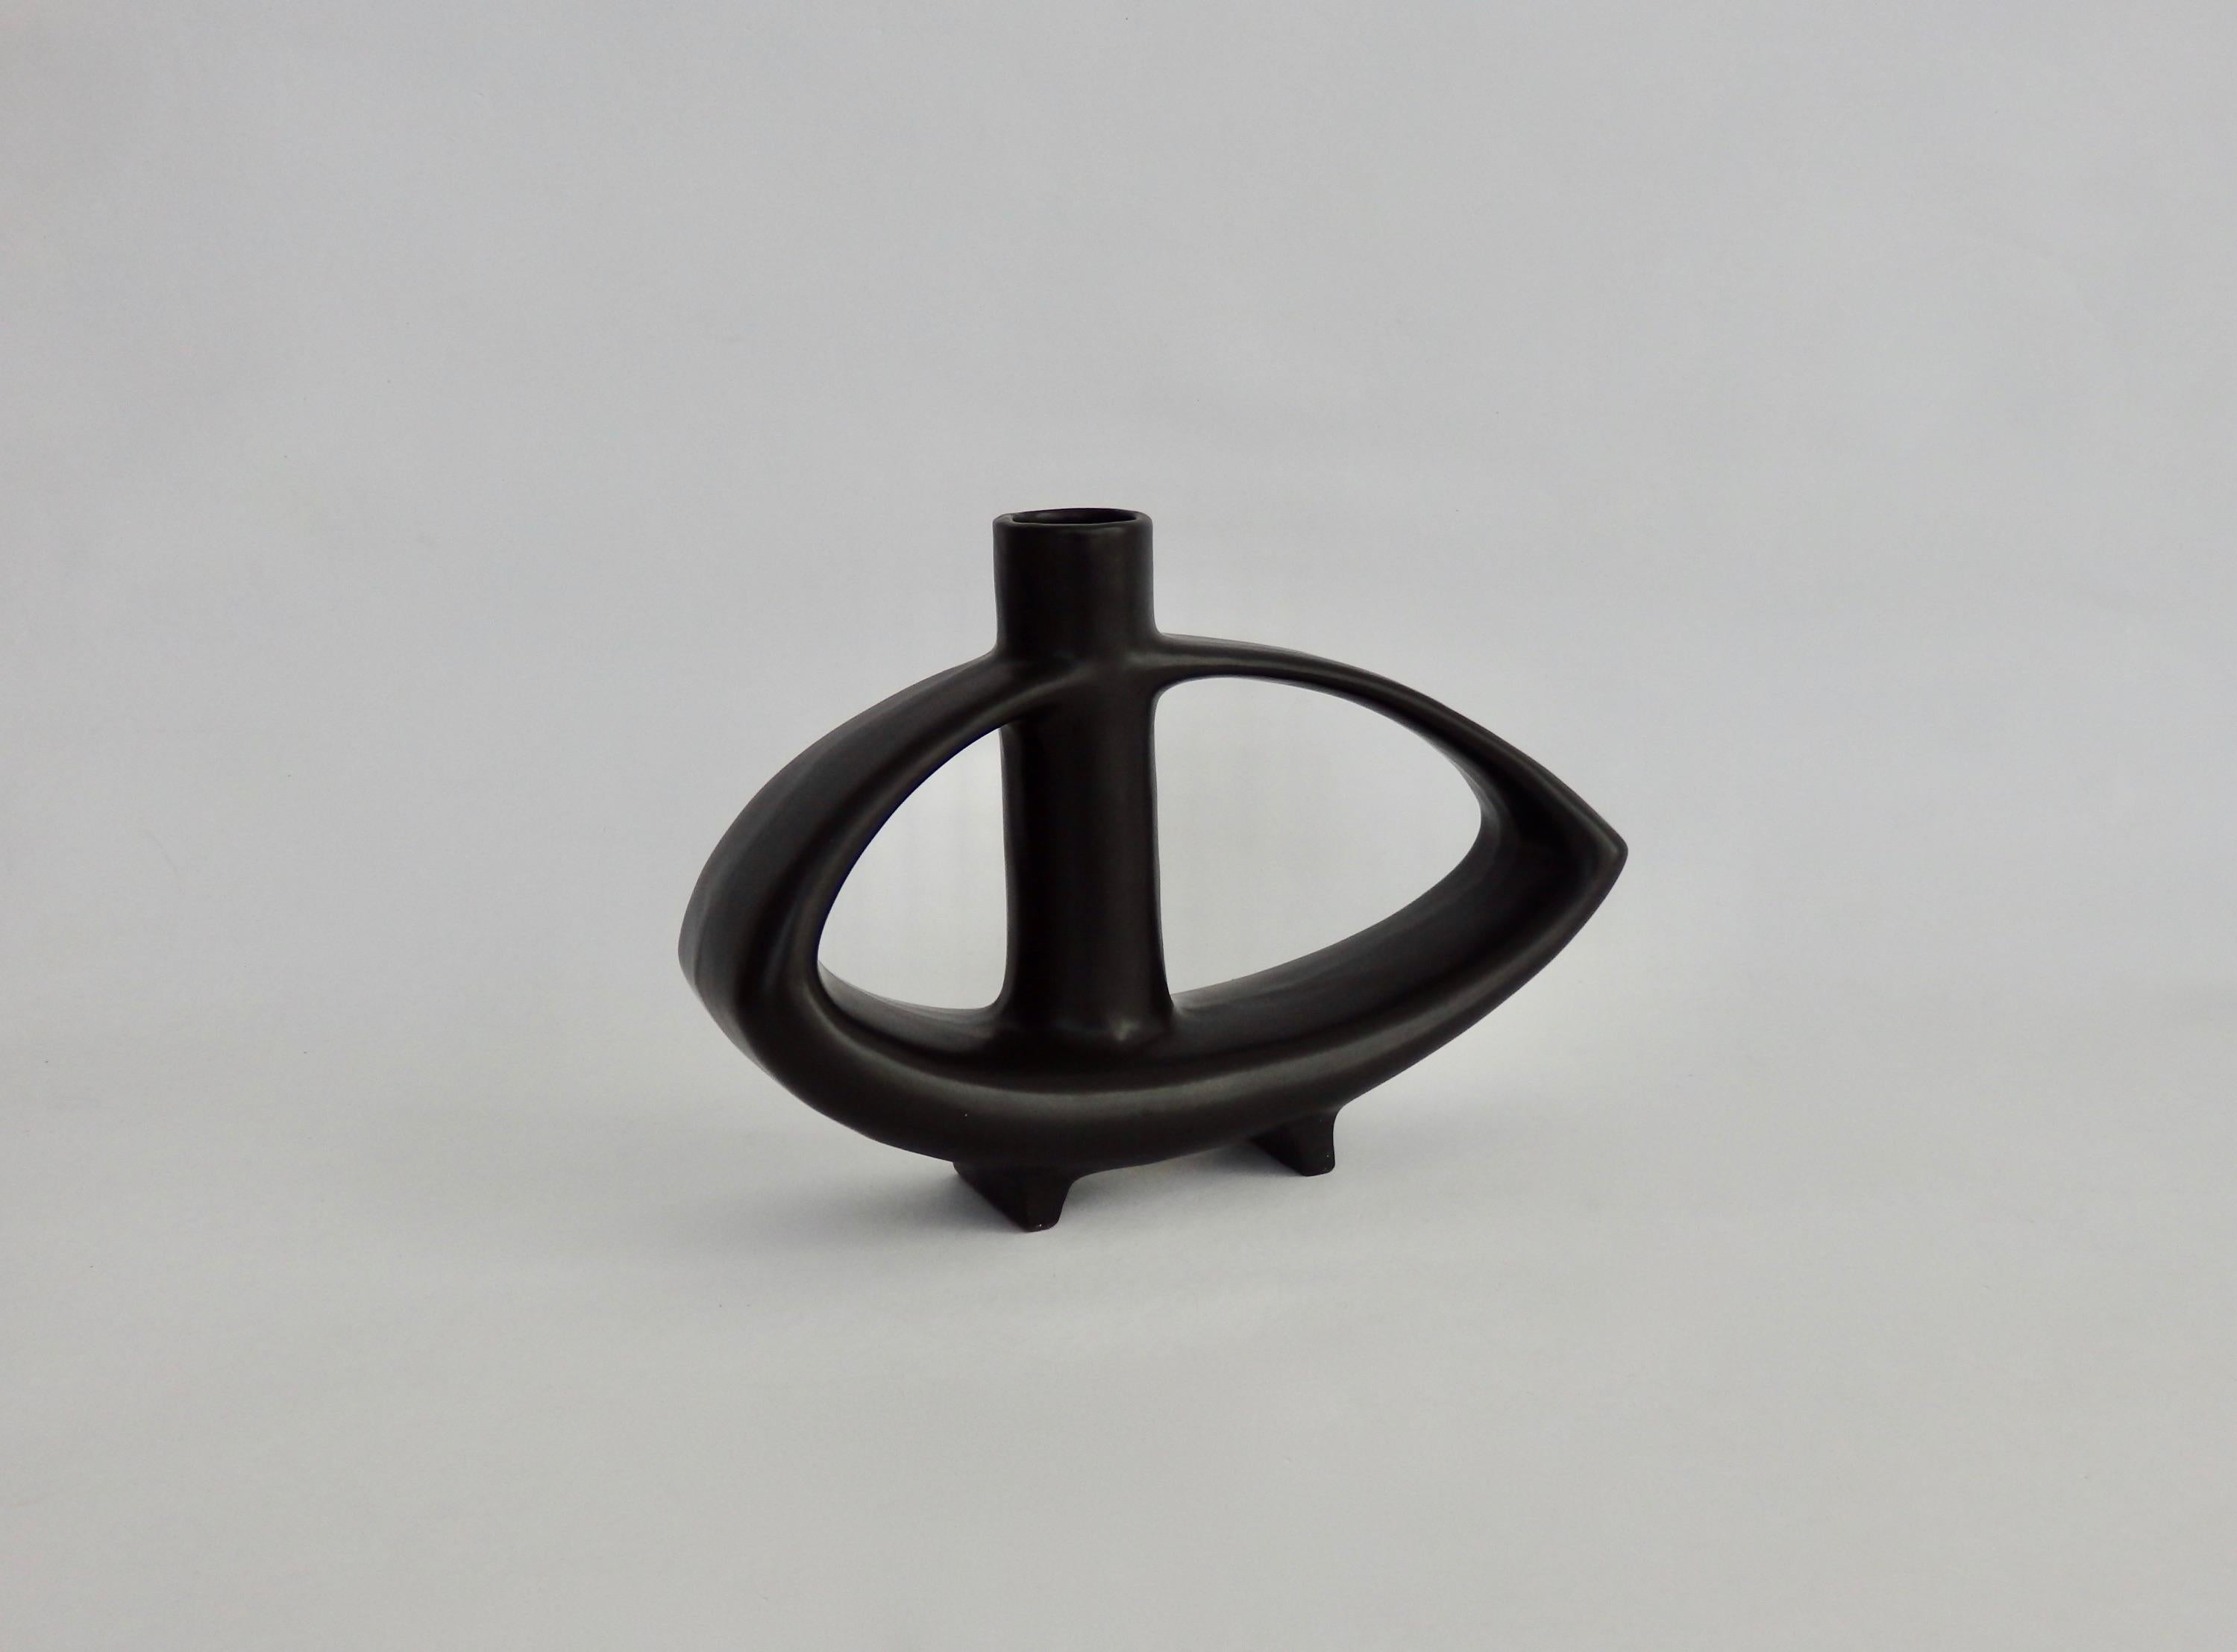 Modernist Japanese Toyo Ikebana sculptural vase in matte black.